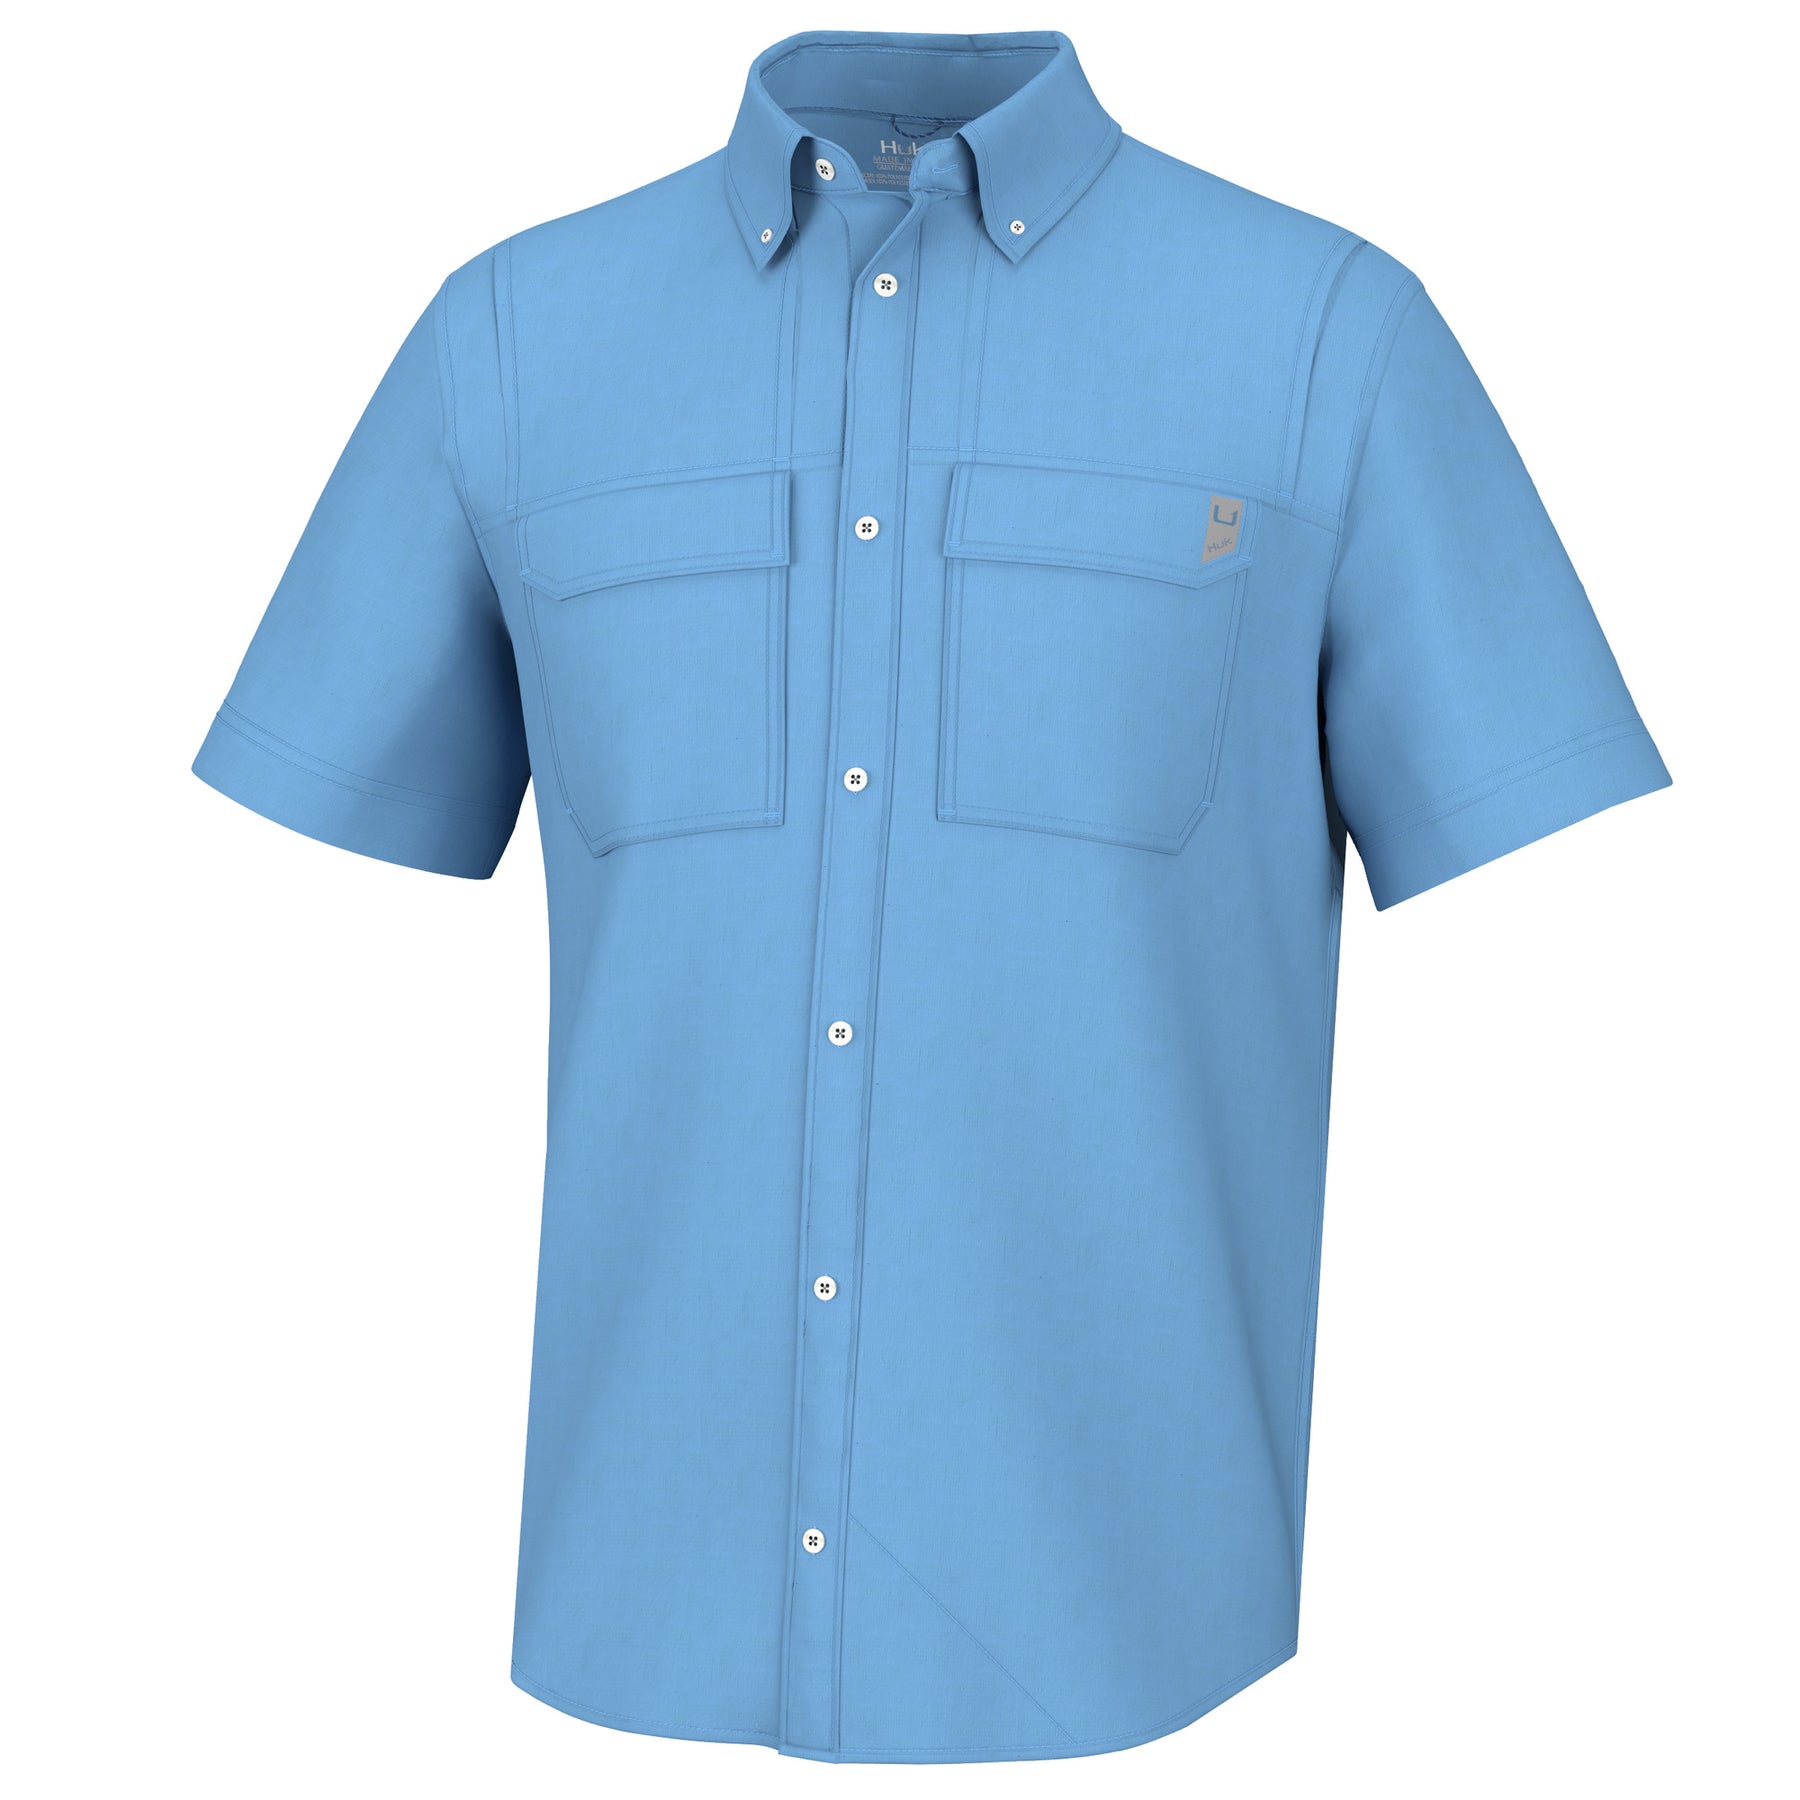 Ersazi Huk Fishing Shirts for Men Men's Shirt Short-Sleeved Mercerized Cotton Striped Color-Blocking Slim Fit Cotton Tshirts for Men Button-Down